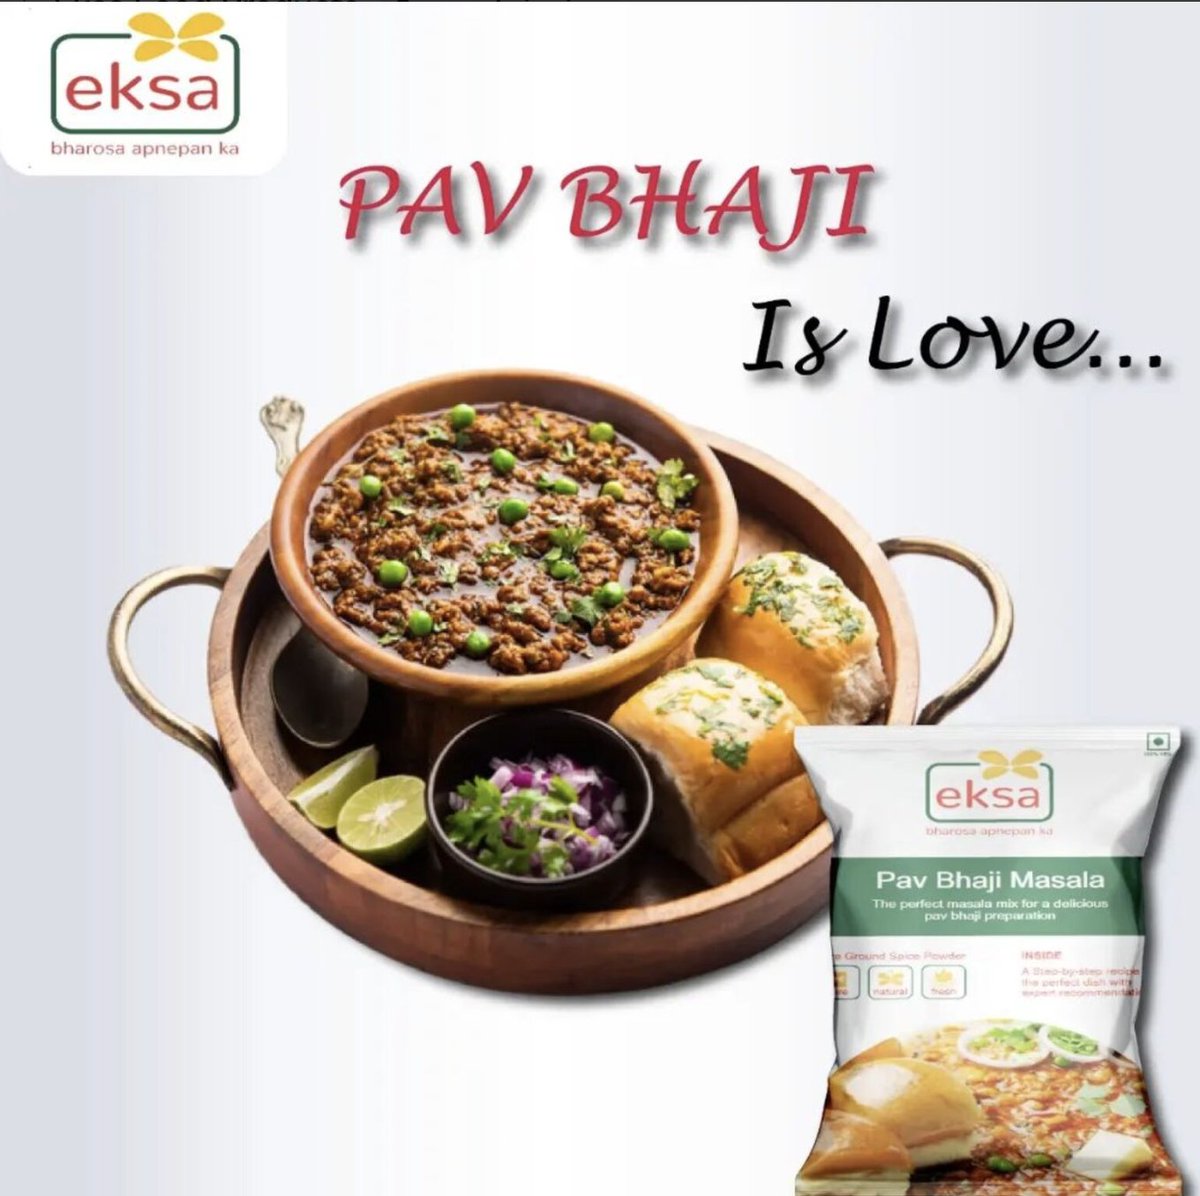 The perfect masala mix for a delicious Pav Bhaji preparation.

#eksa #eksamasala #eksamasala #bharosaapnepanka #spice #masala #pavbhaji #pavbhaji😋 #pavbhajirecipe #veg #vegdishes #vegdish #food #foodie